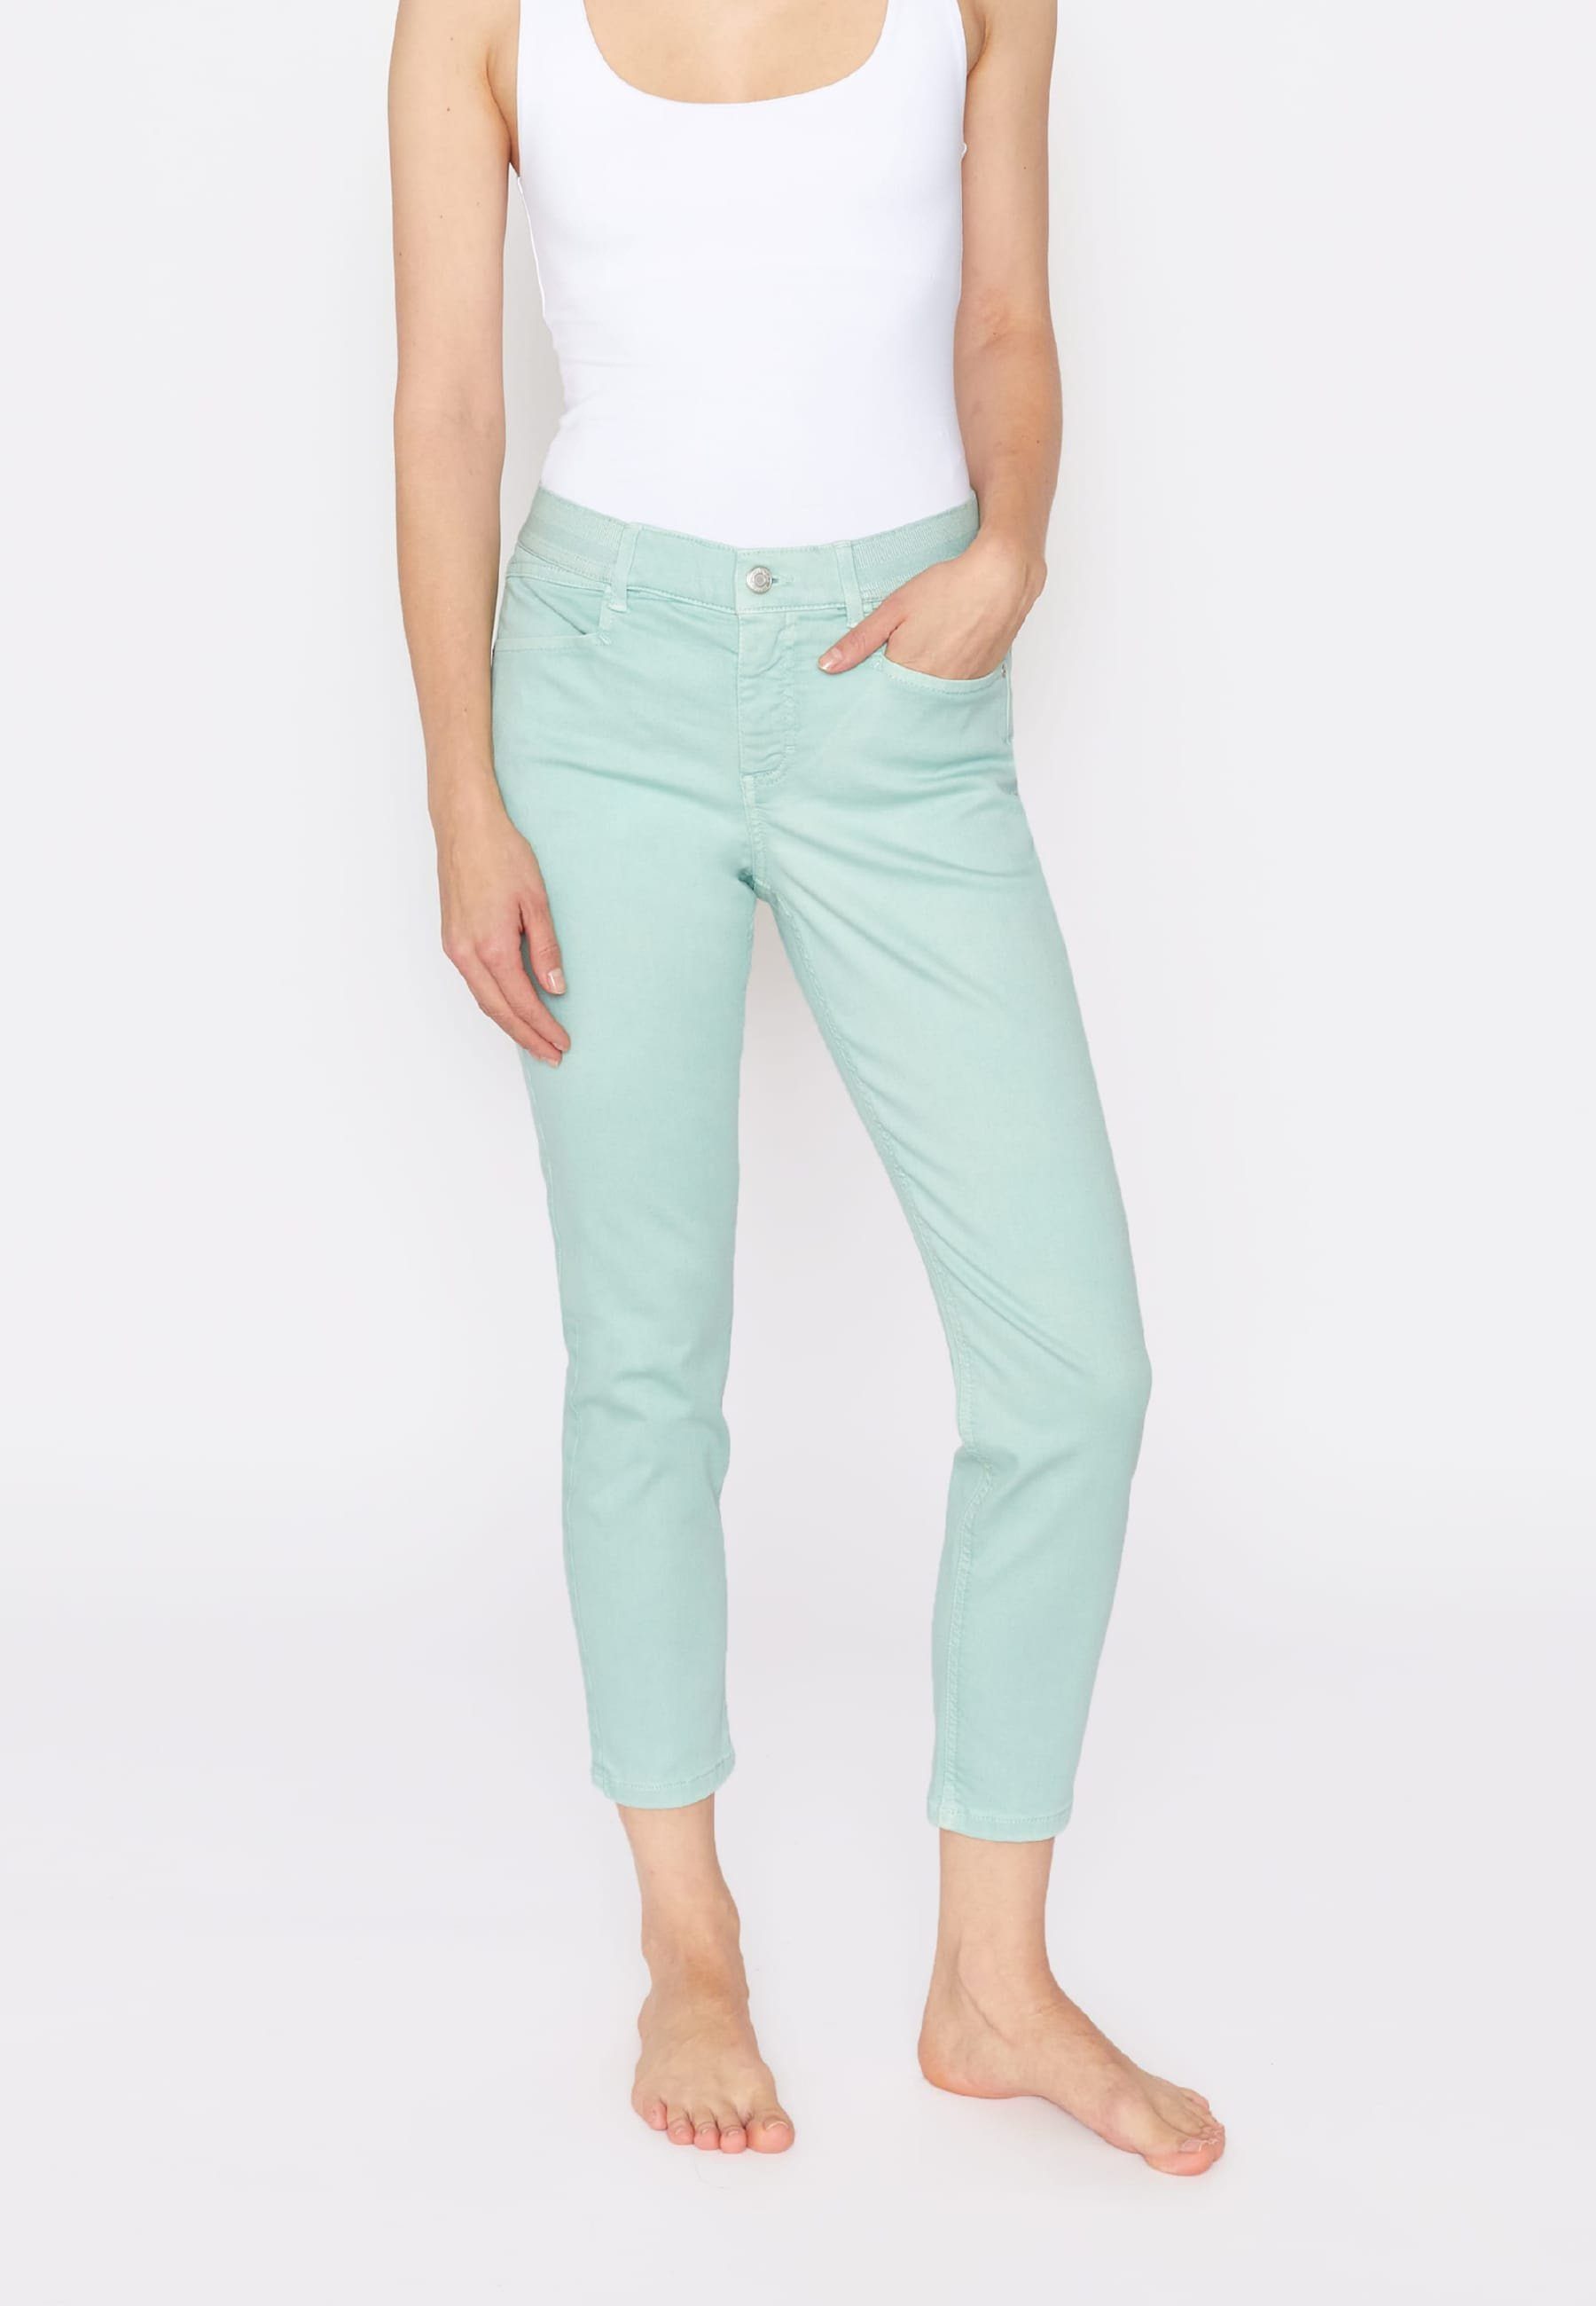 OSFA Denim Jeans Slim-fit-Jeans Coloured Label-Applikationen Crop mint mit mit ANGELS